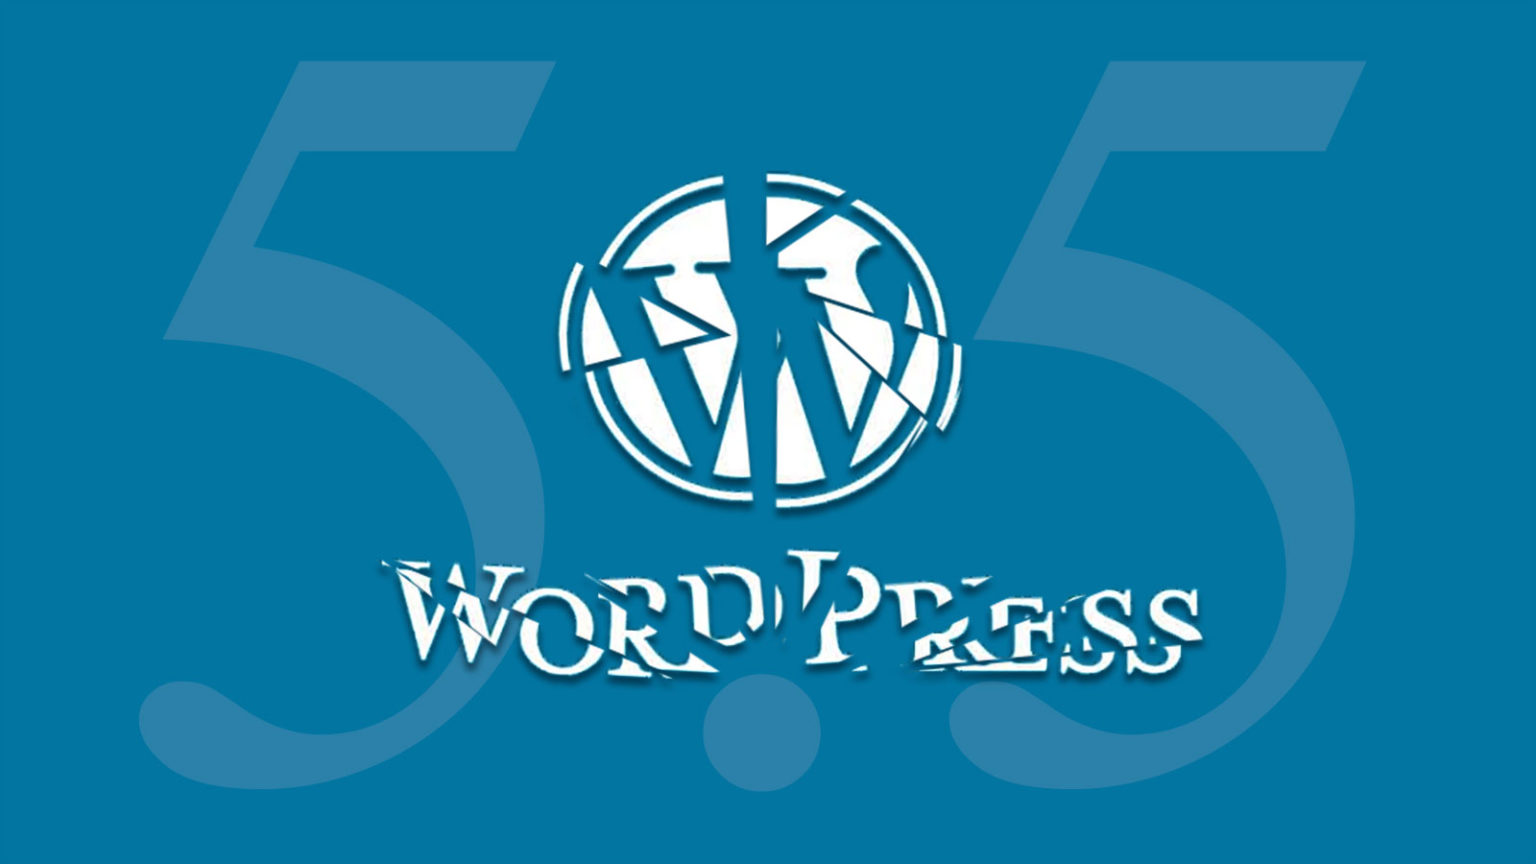 Problemas con WordPress 5.5